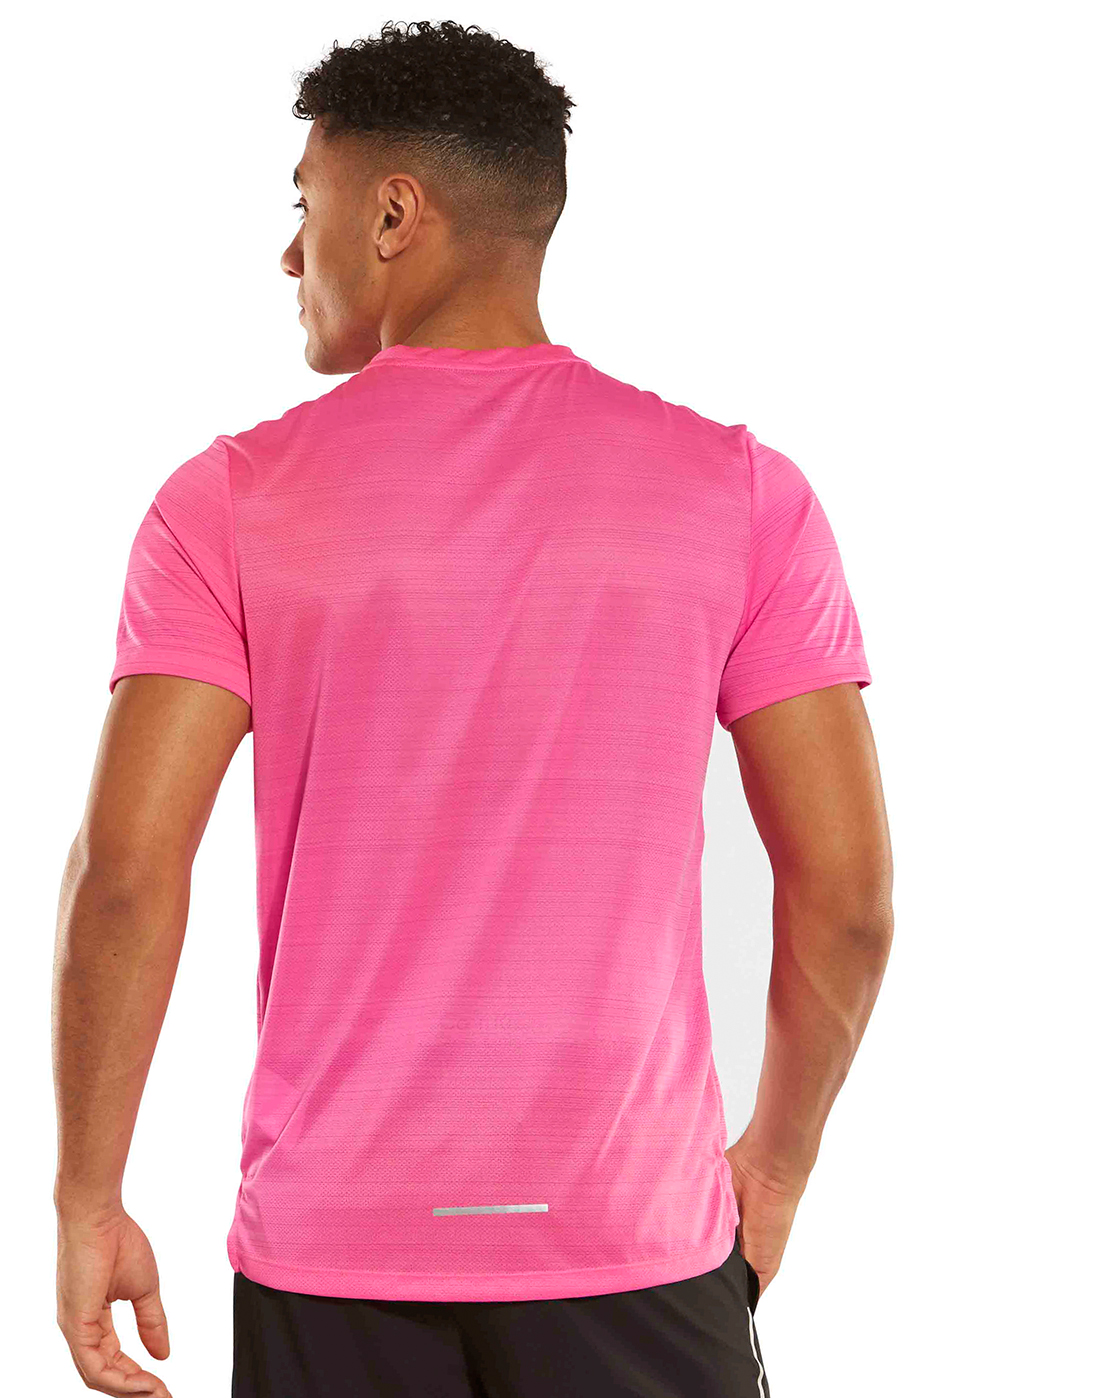 fuchsia pink nike shirt